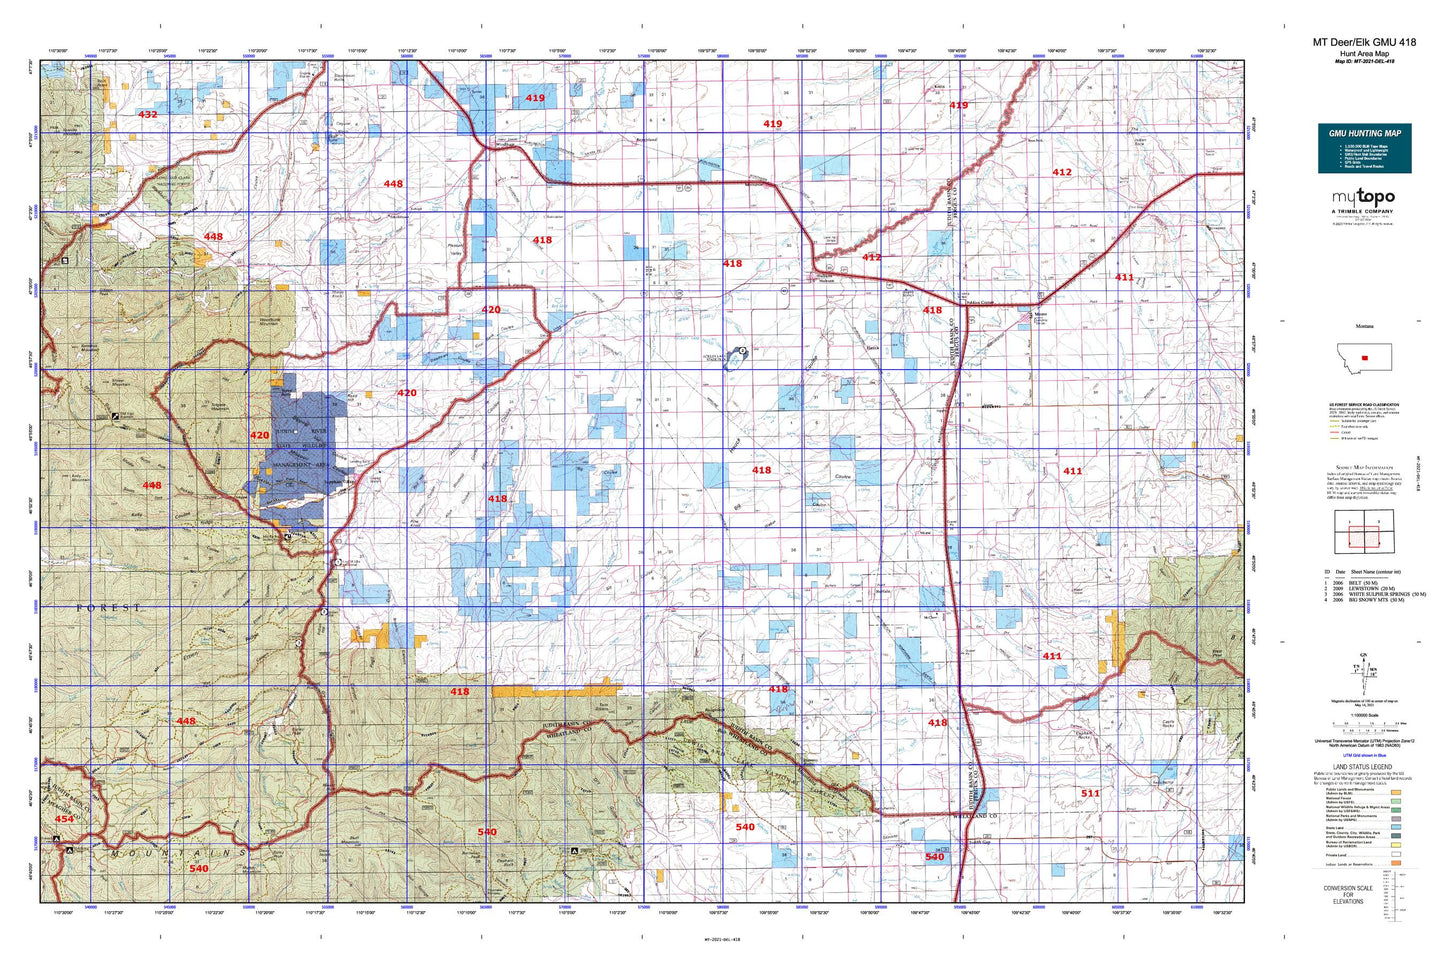 Montana Deer/Elk GMU 418 Map Image